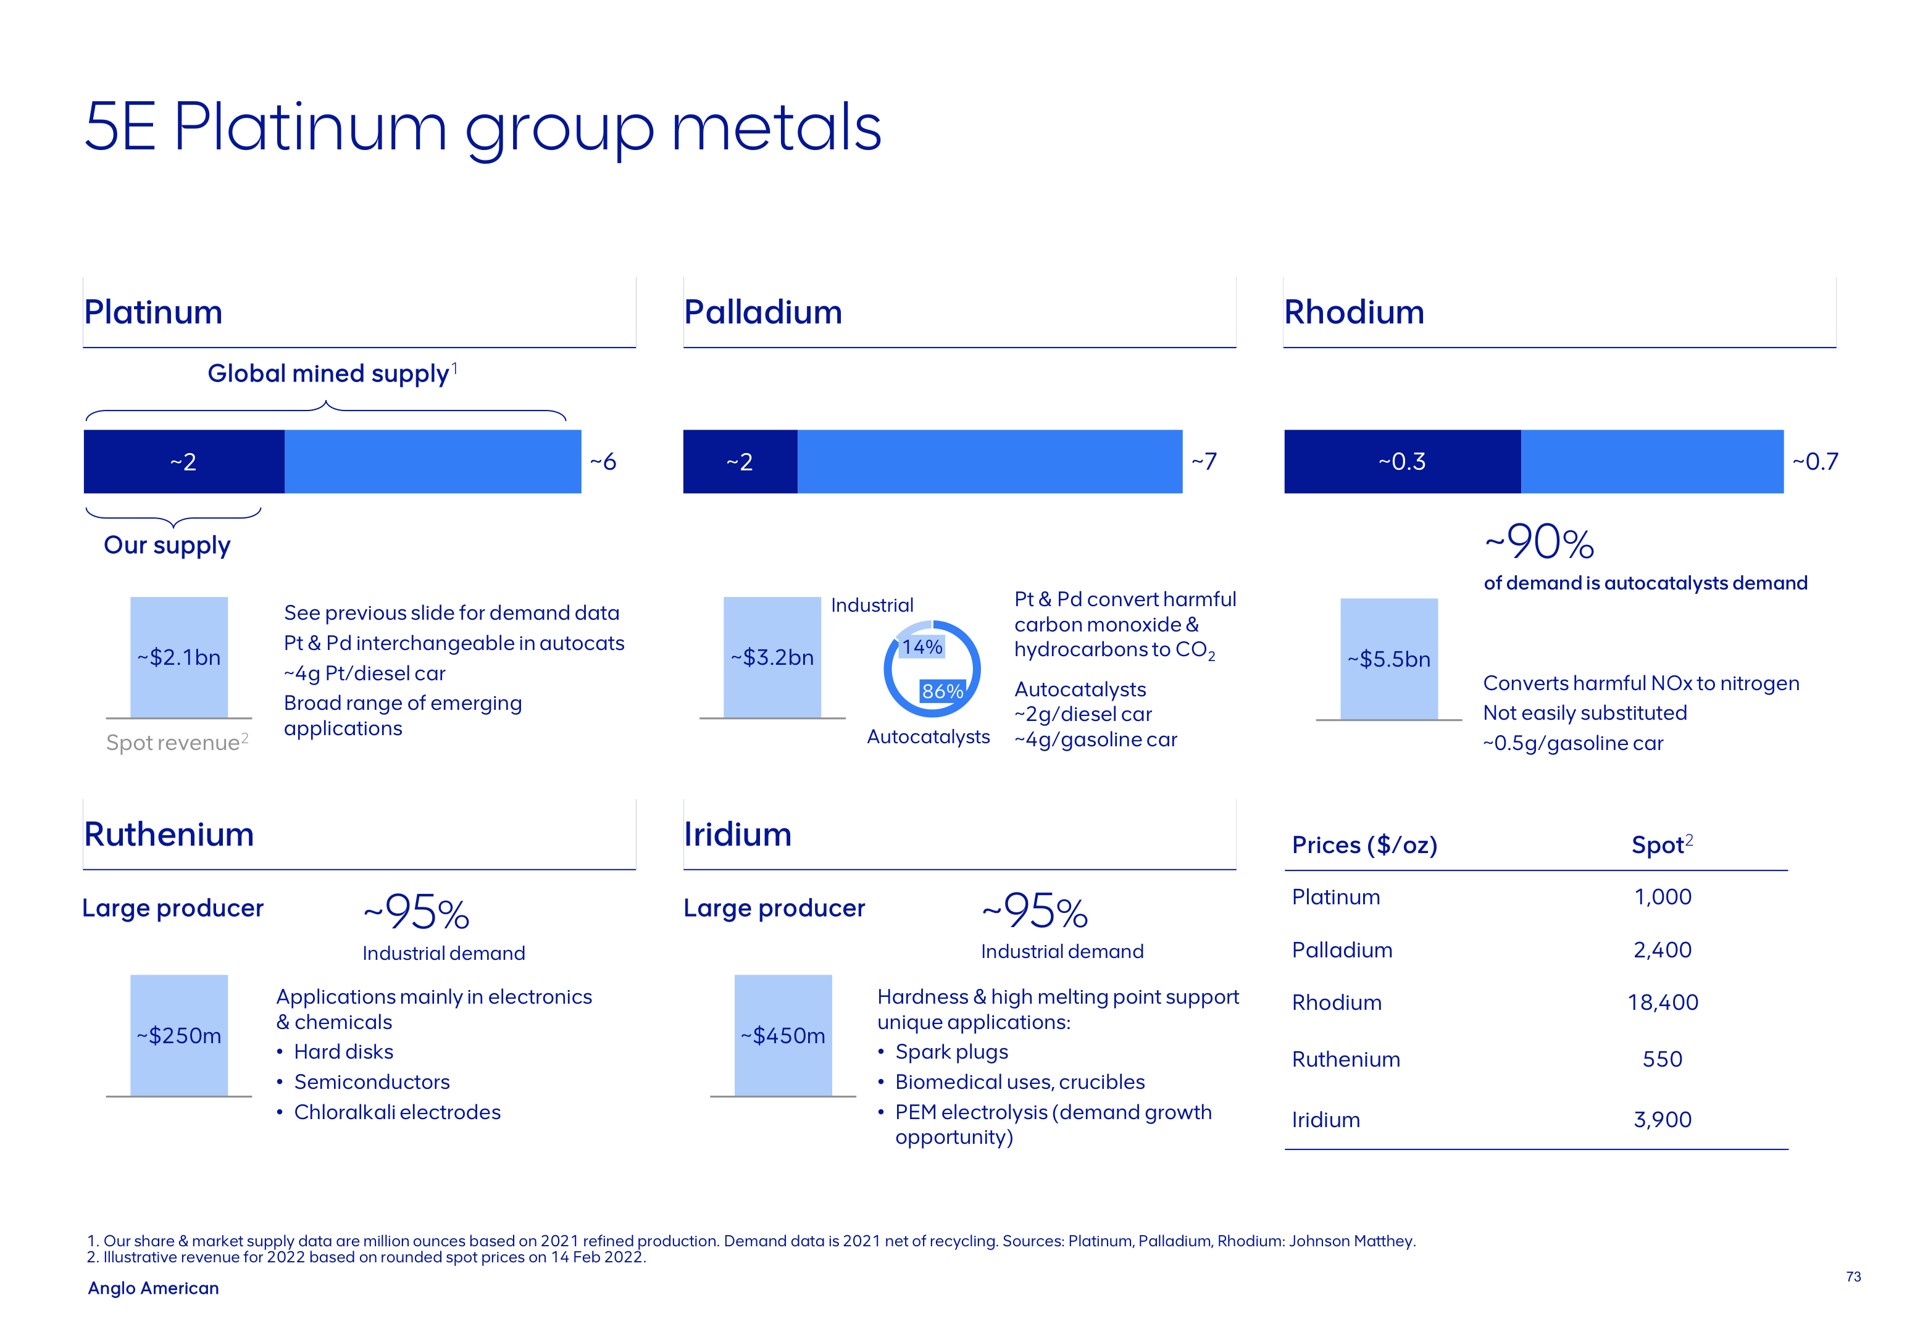 platinum group metals | AngloAmerican